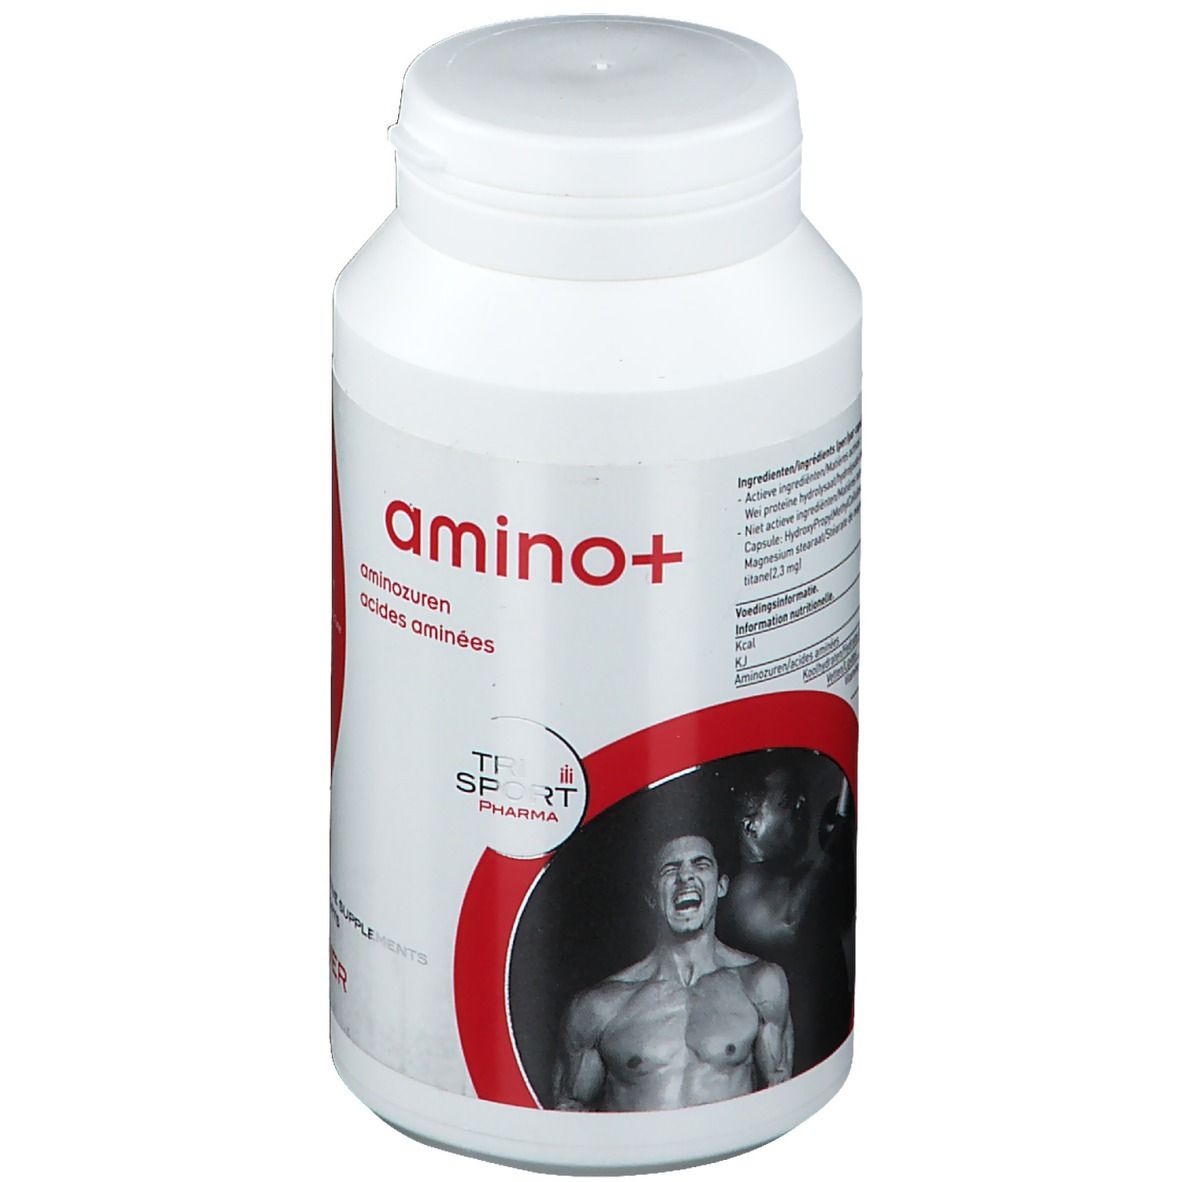 Trisport Pharma Amino+